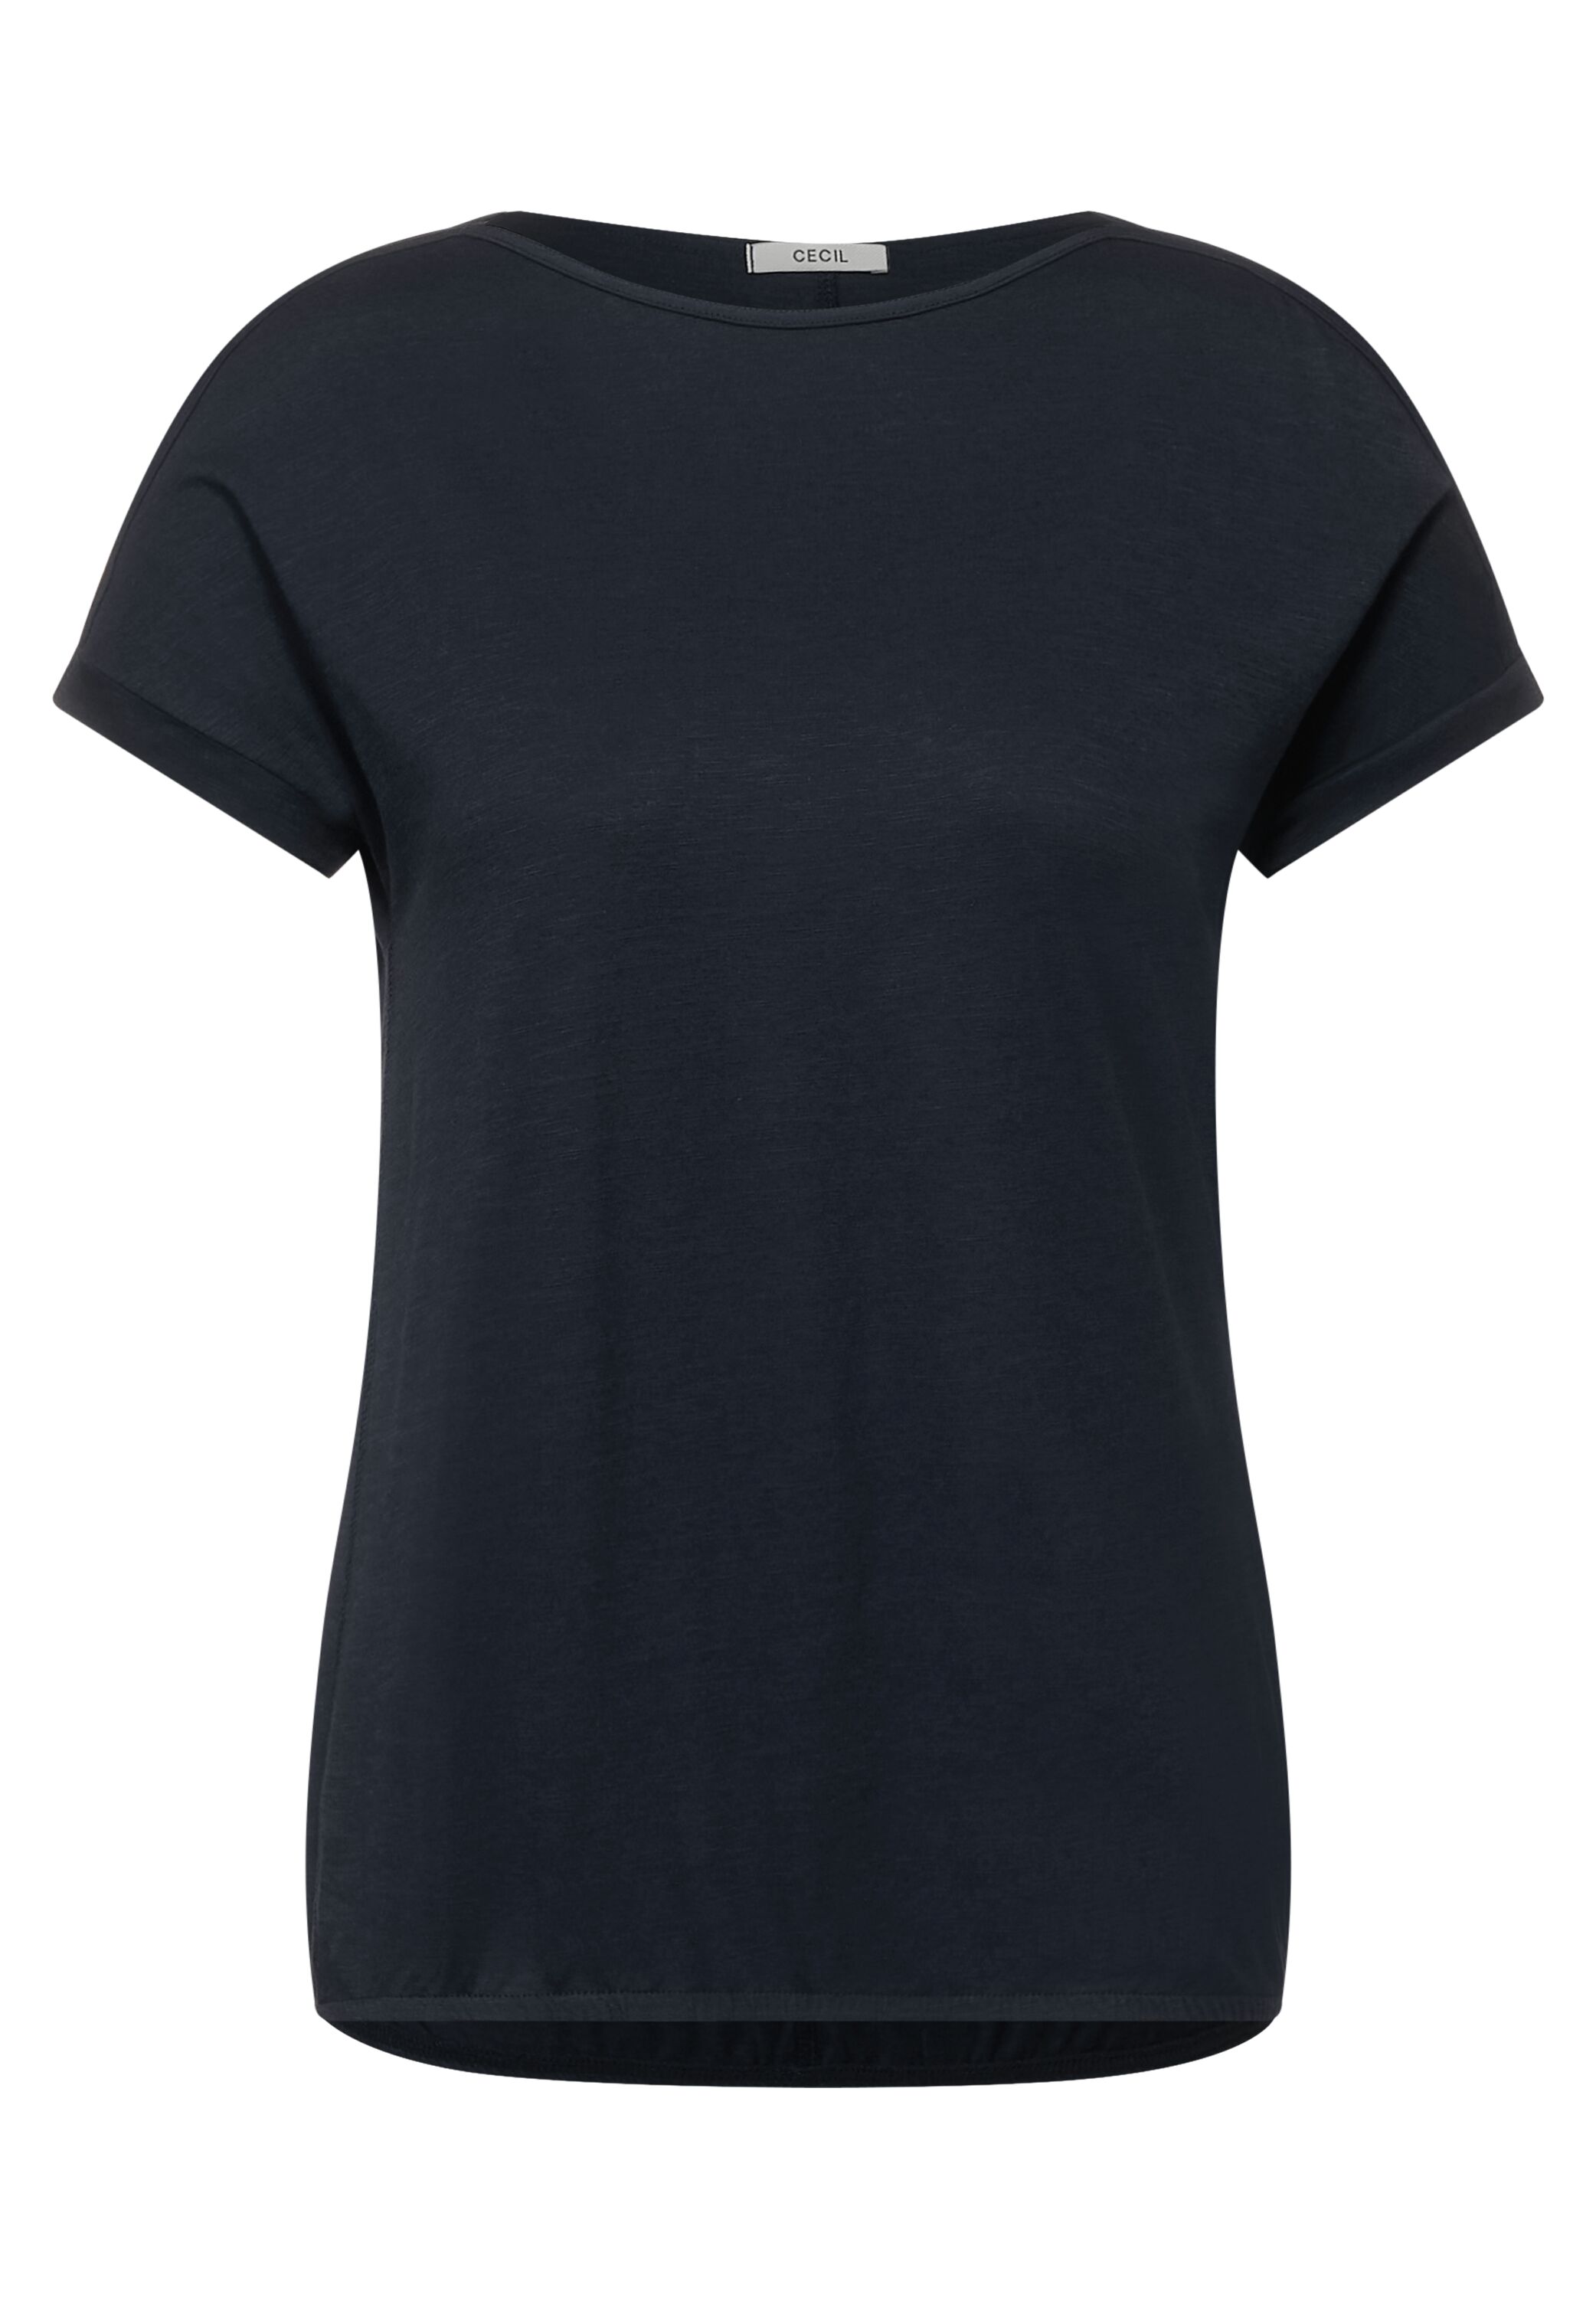 CECIL T-Shirt in Deep Blue im SALE reduziert B316344-10128 - CONCEPT Mode | T-Shirts